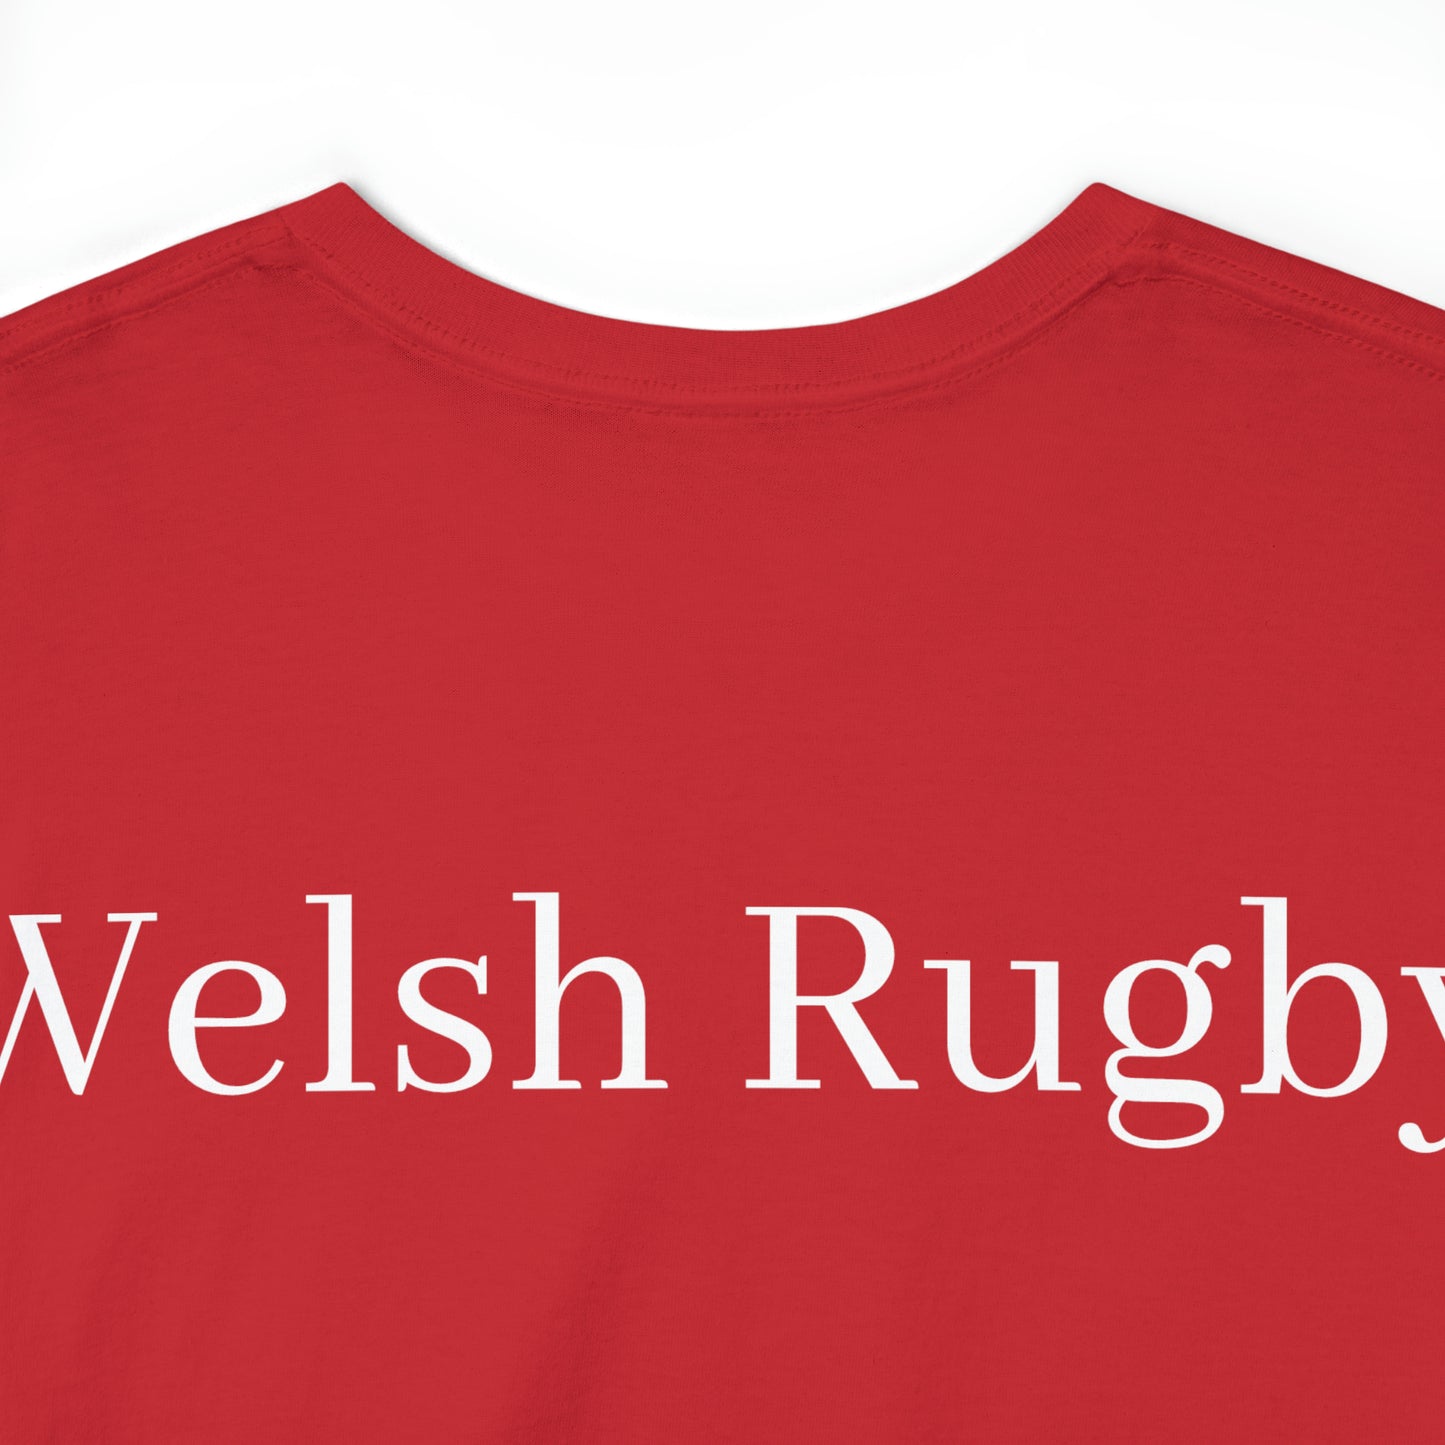 Wales Lifting RWC - dark shirts